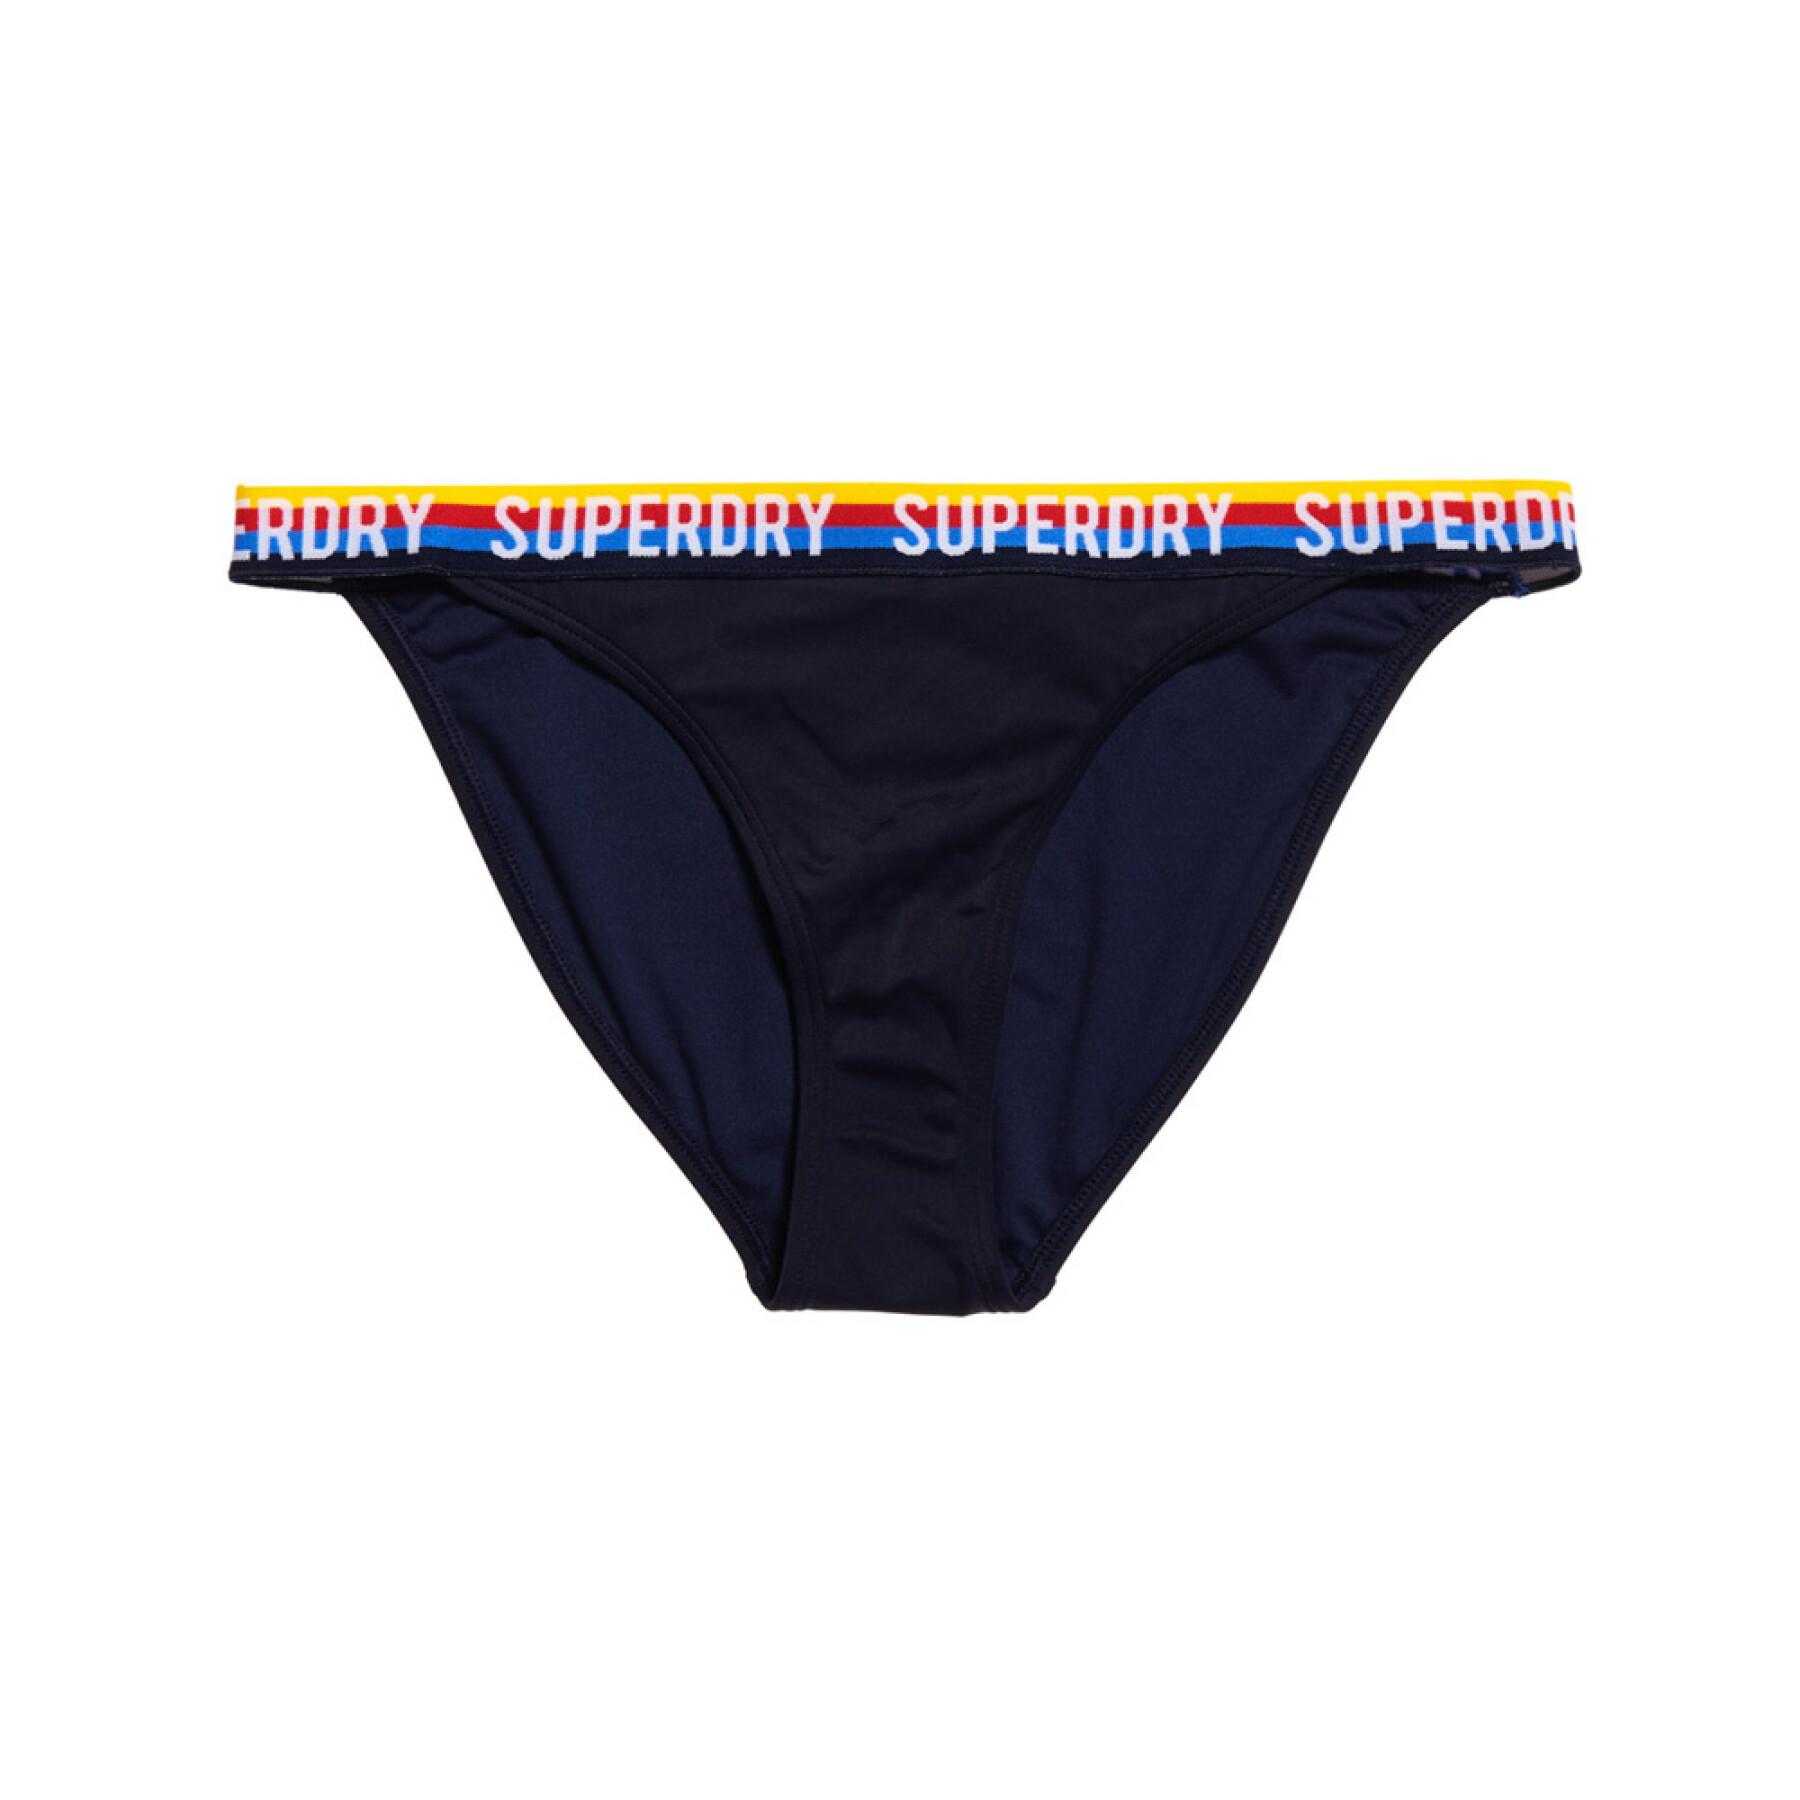 Sydney woman Superdry Bikini Bottom